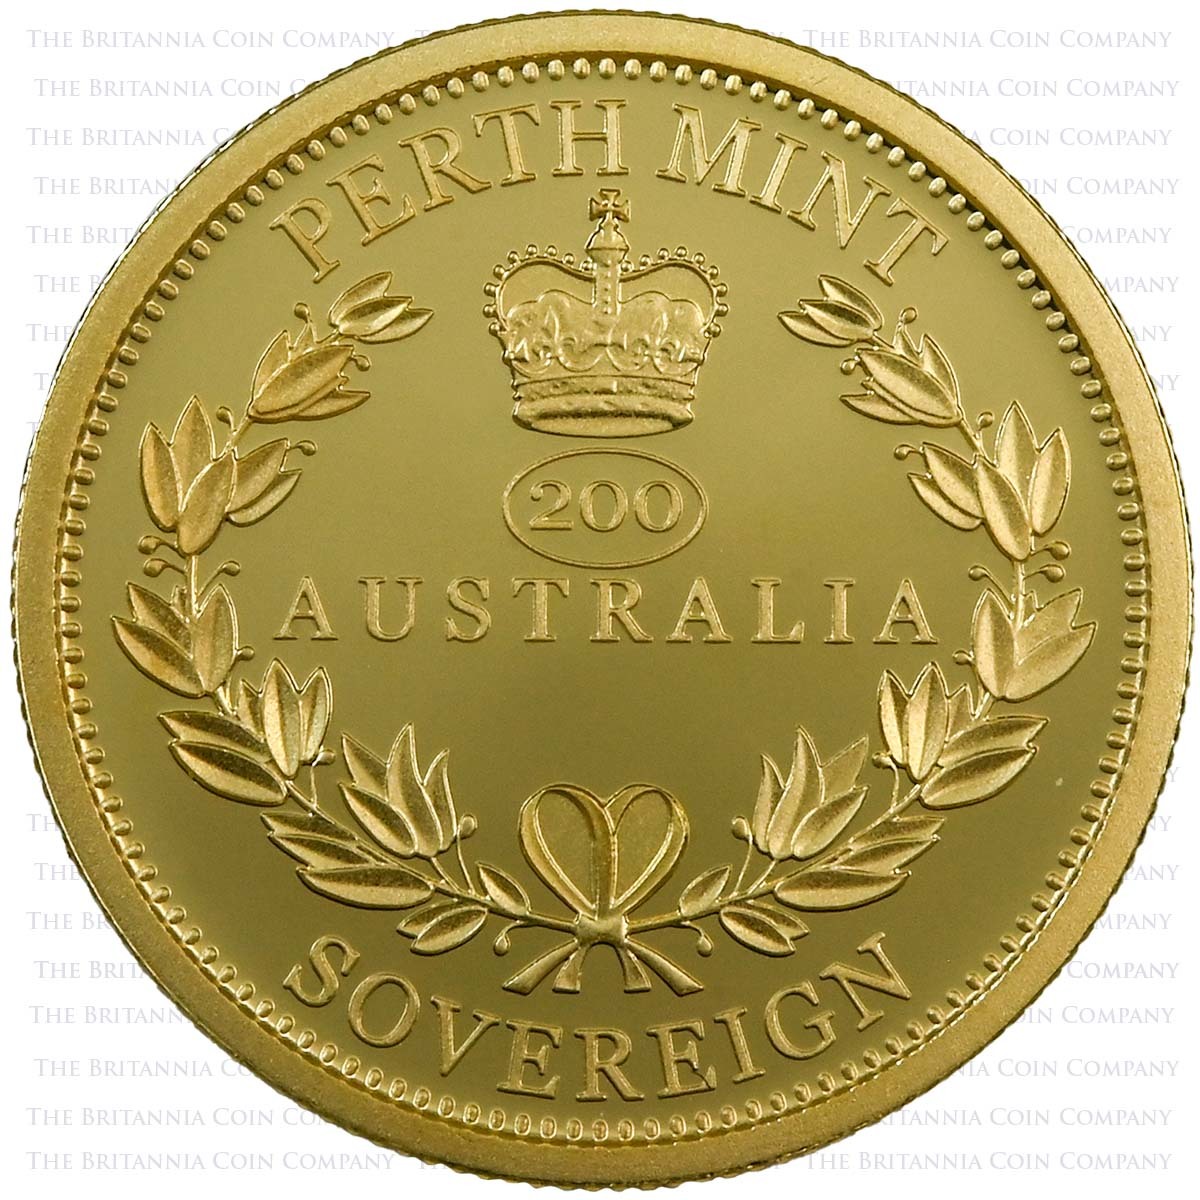 2019 Australia Gold Proof Sovereign $25 Reverse